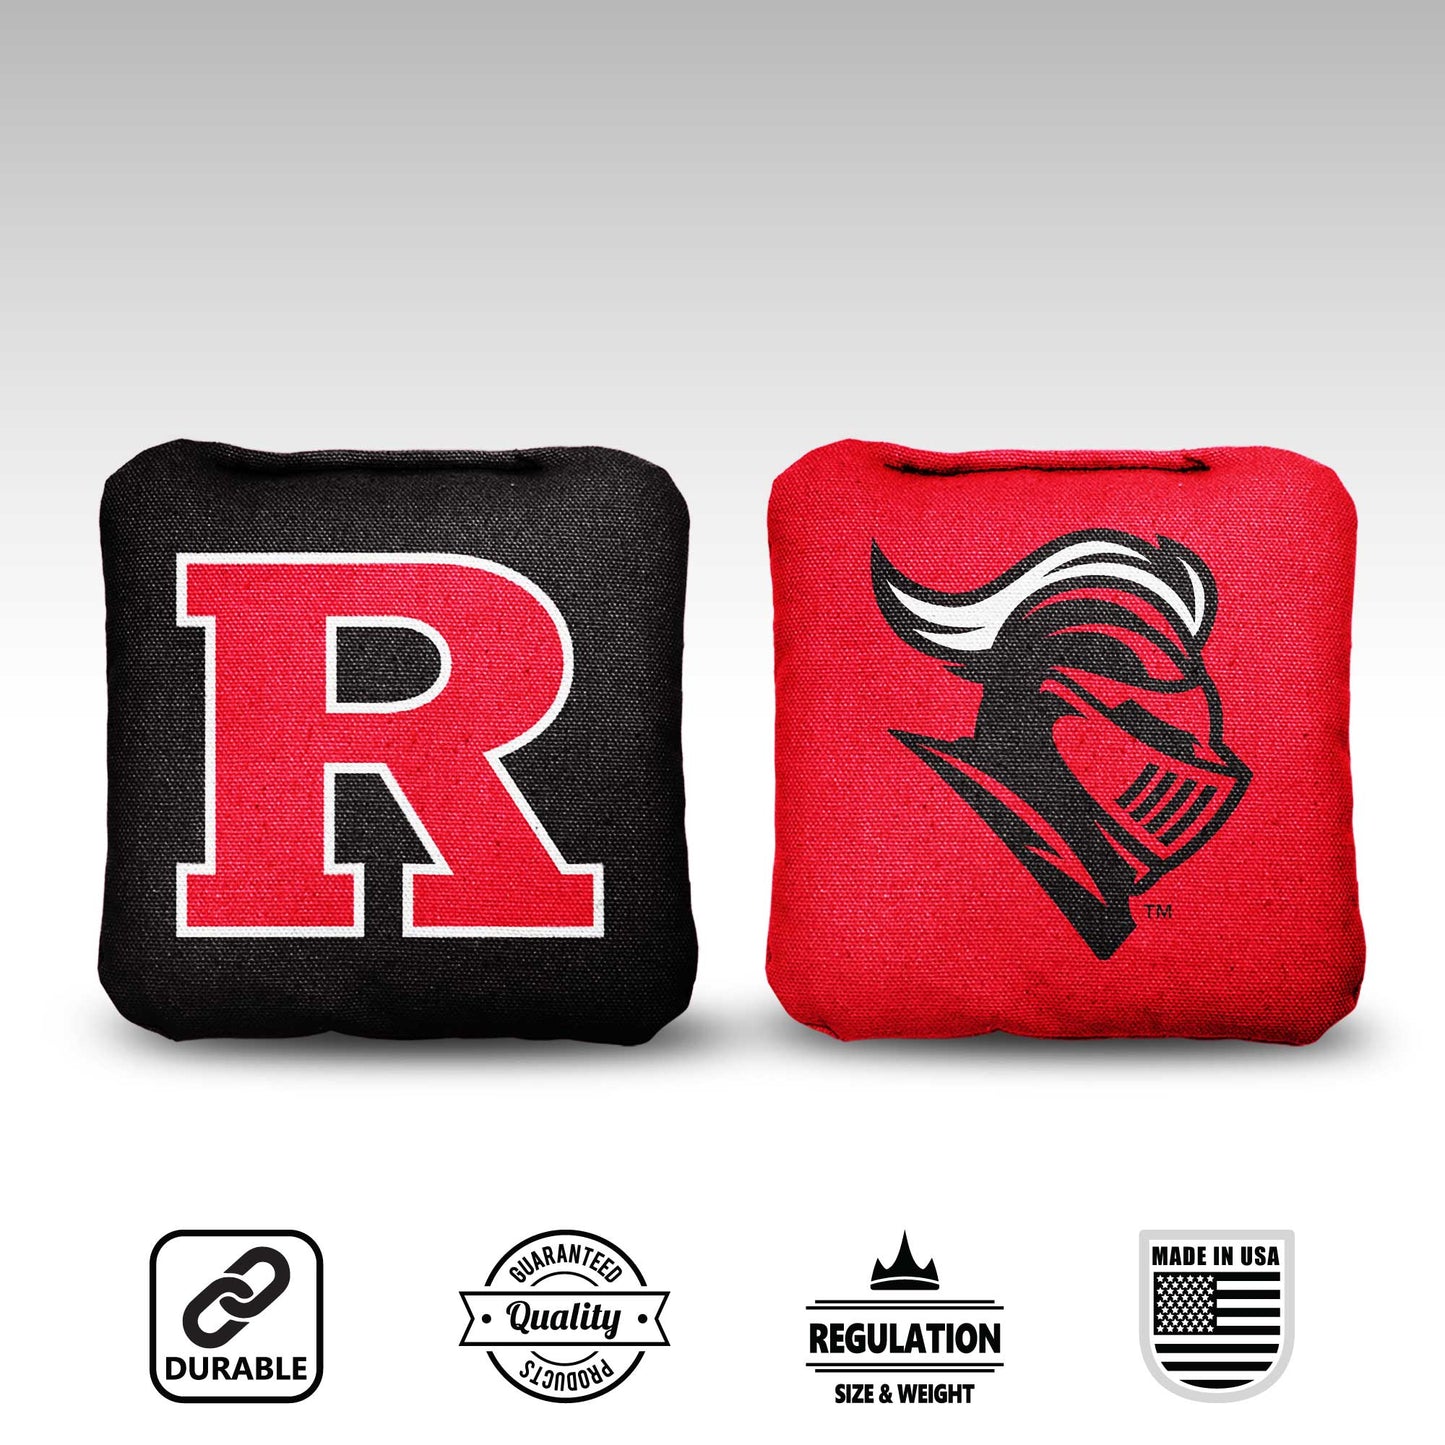 Rutgers University Cornhole Bags - 8 Cornhole Bags